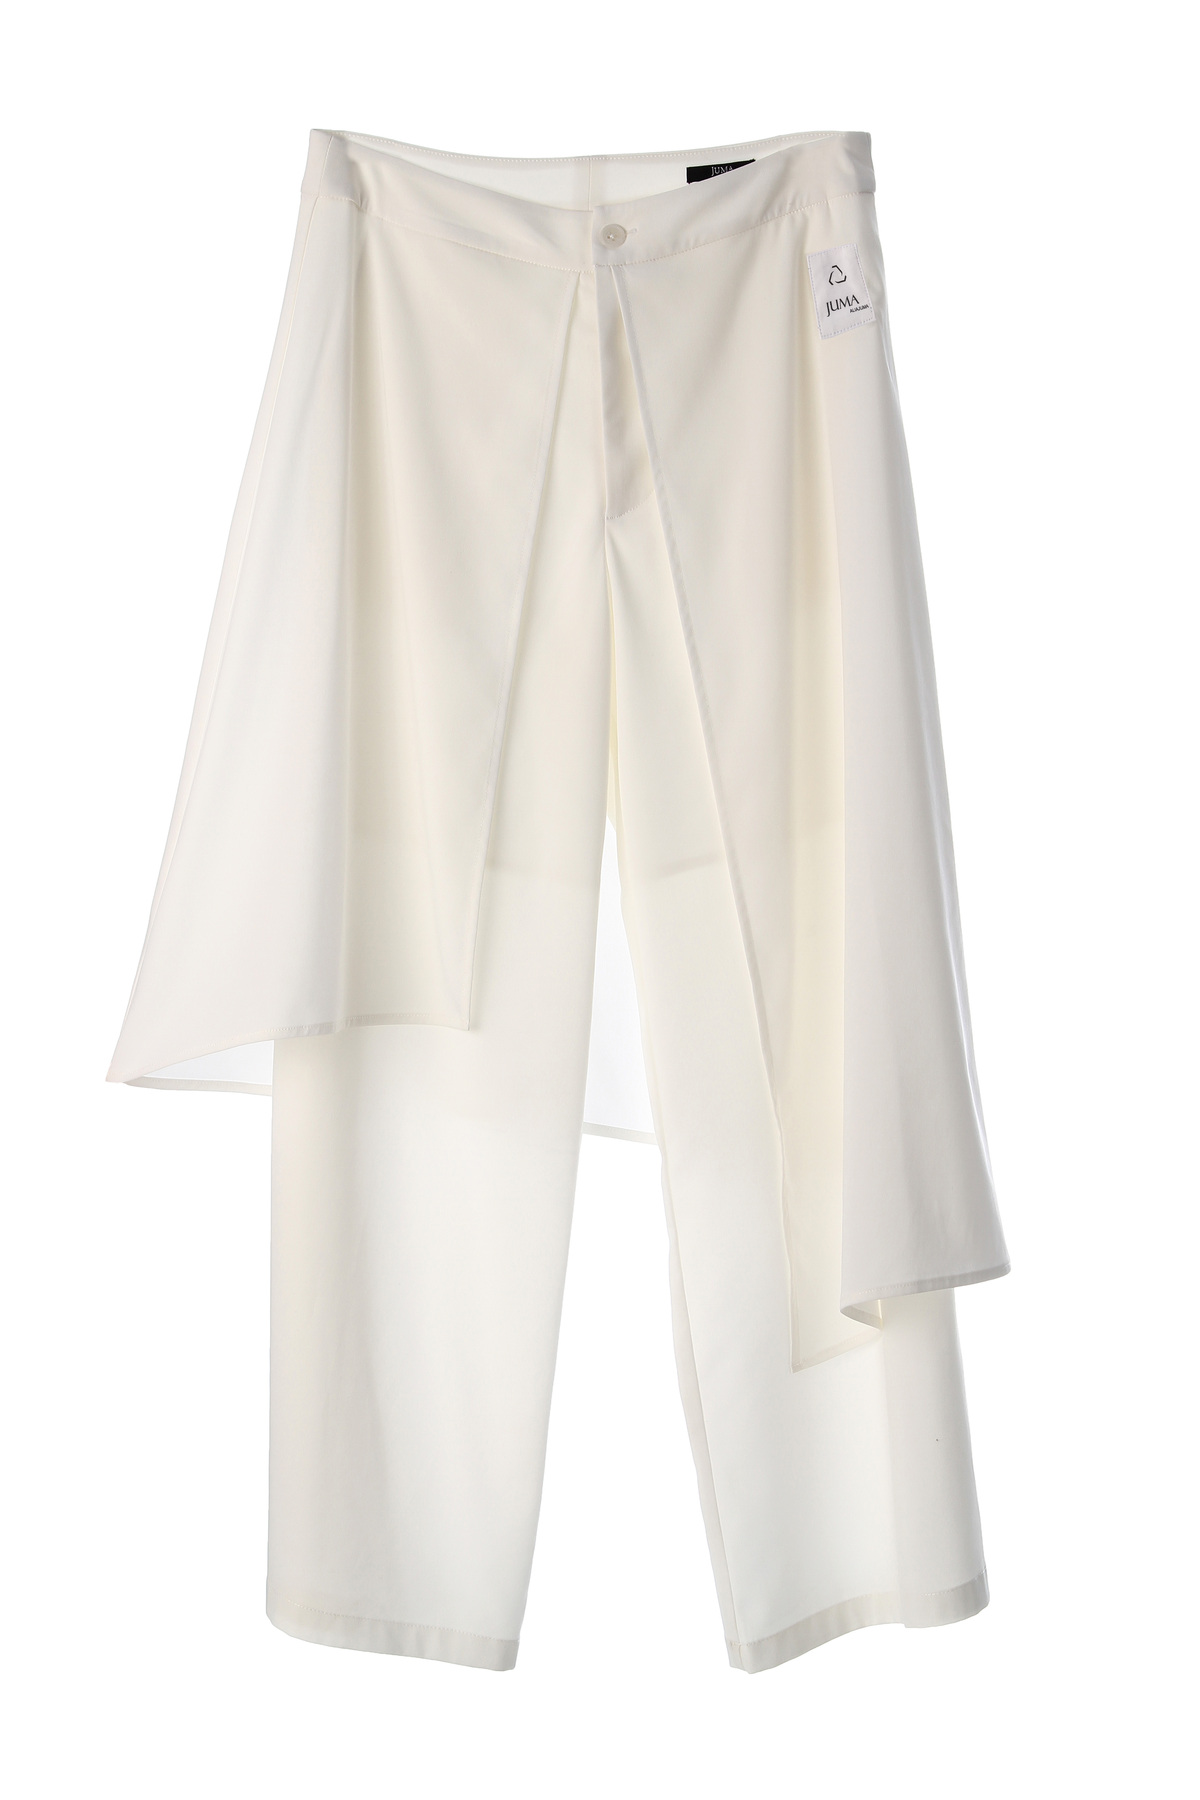 JUMA 裙裤-16个再生水瓶-白色｜JUMA Wrap Skort - 16 Recycled Water Bottles - White